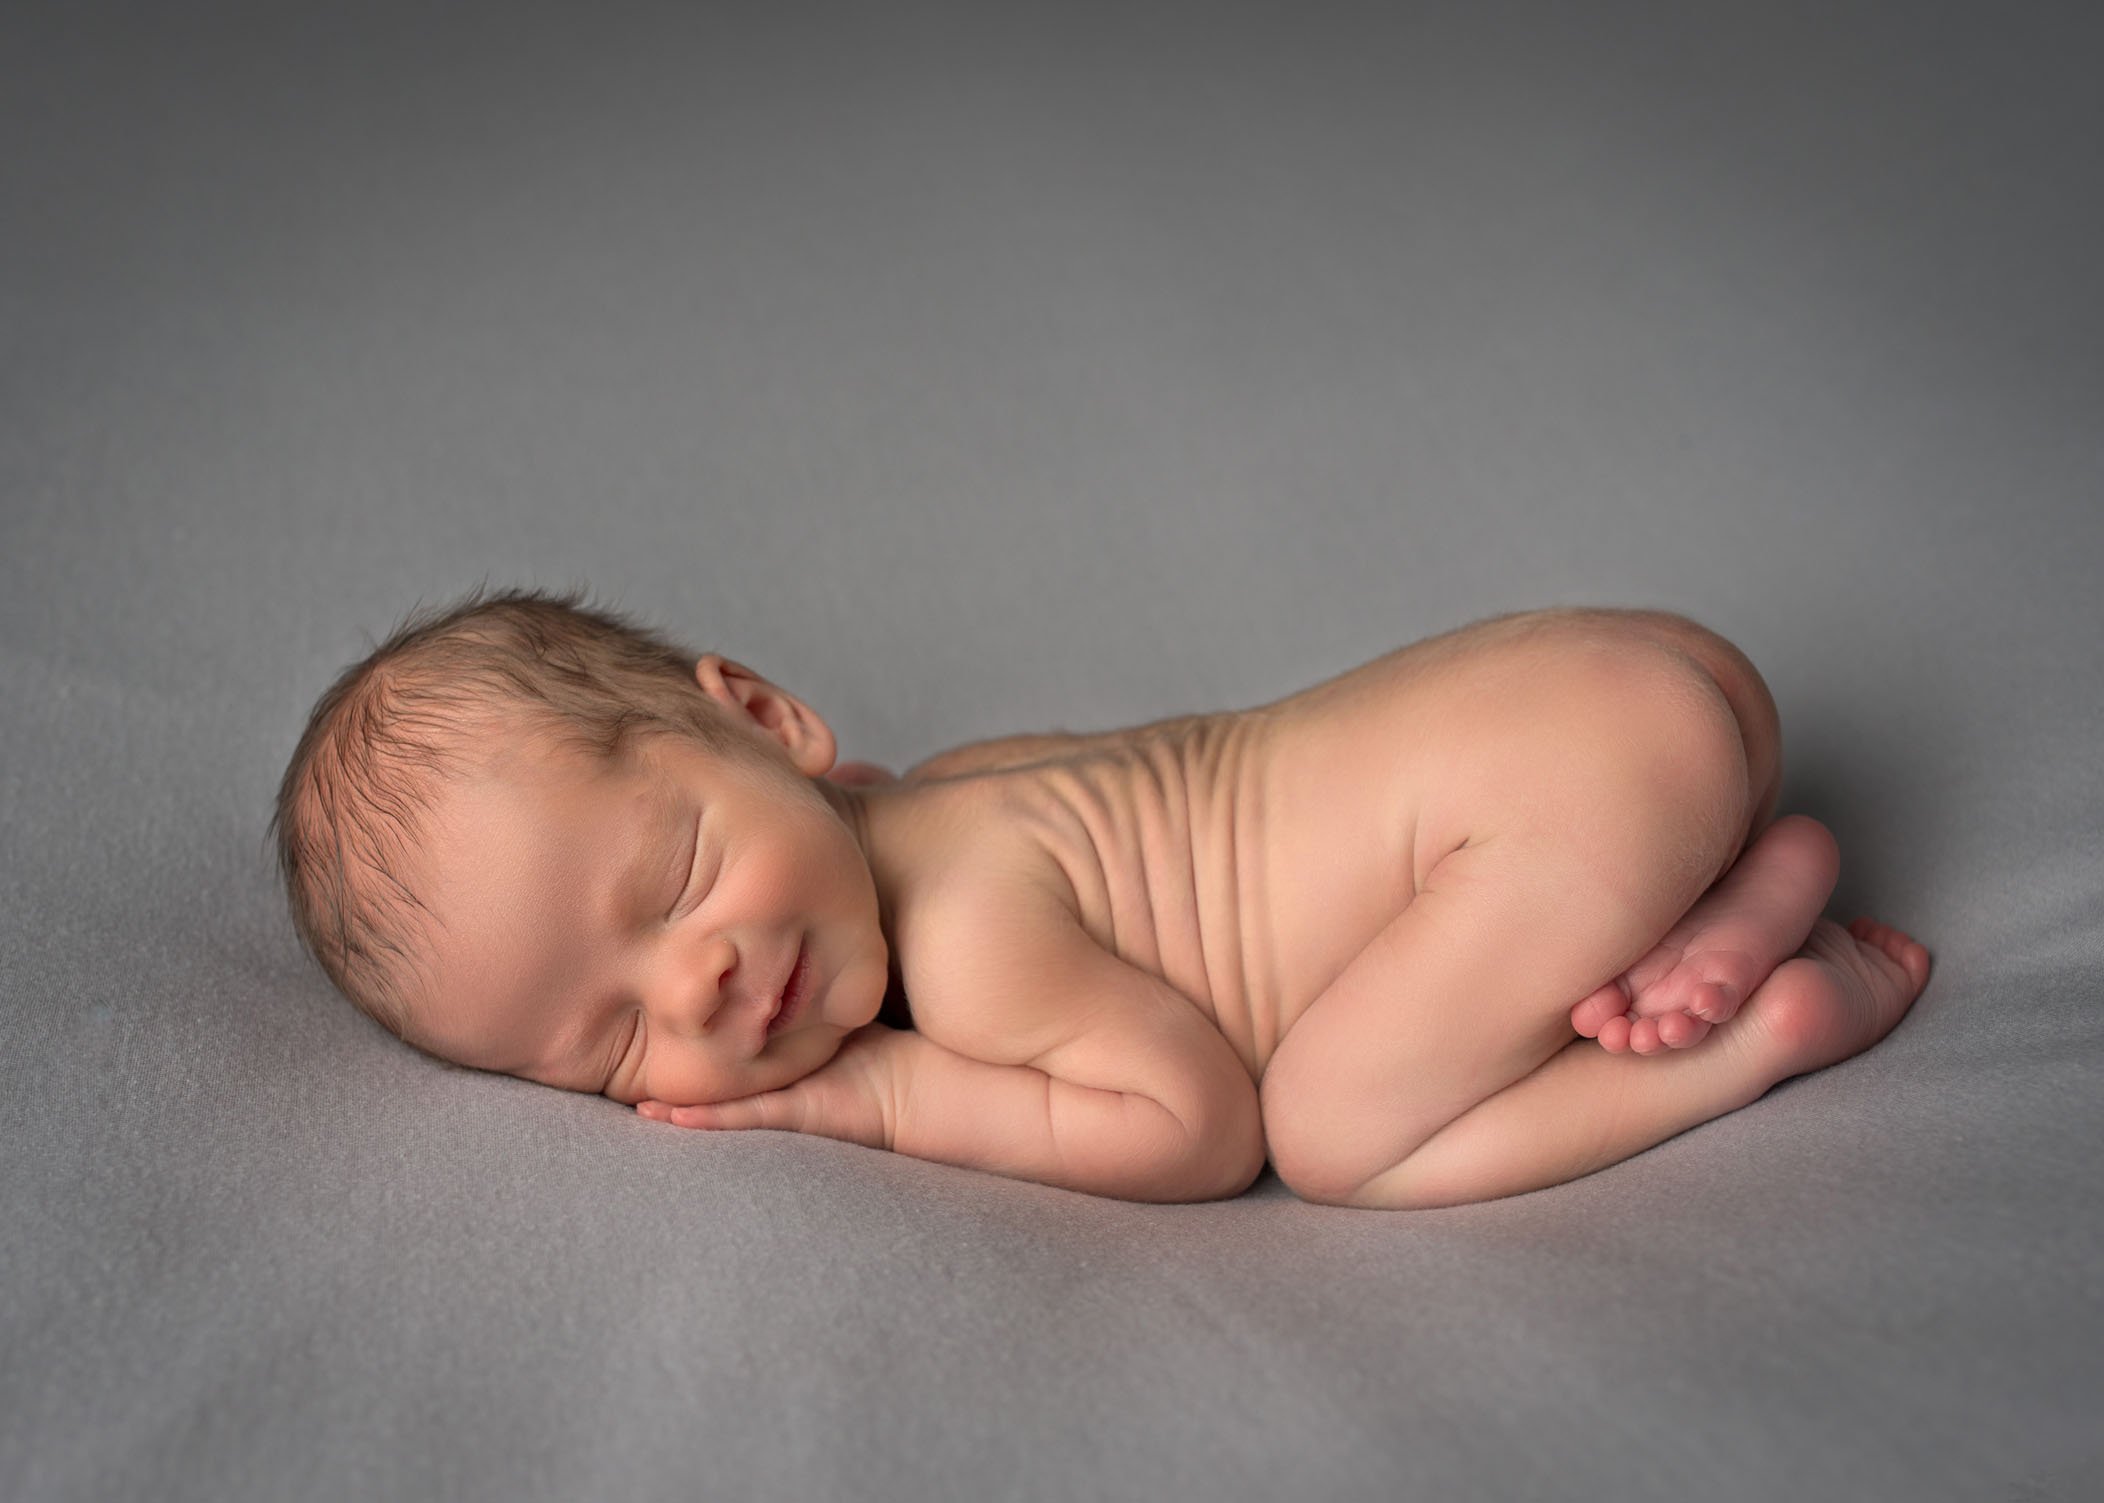 newborn boy sleeping in bum up pose on grey background smiling